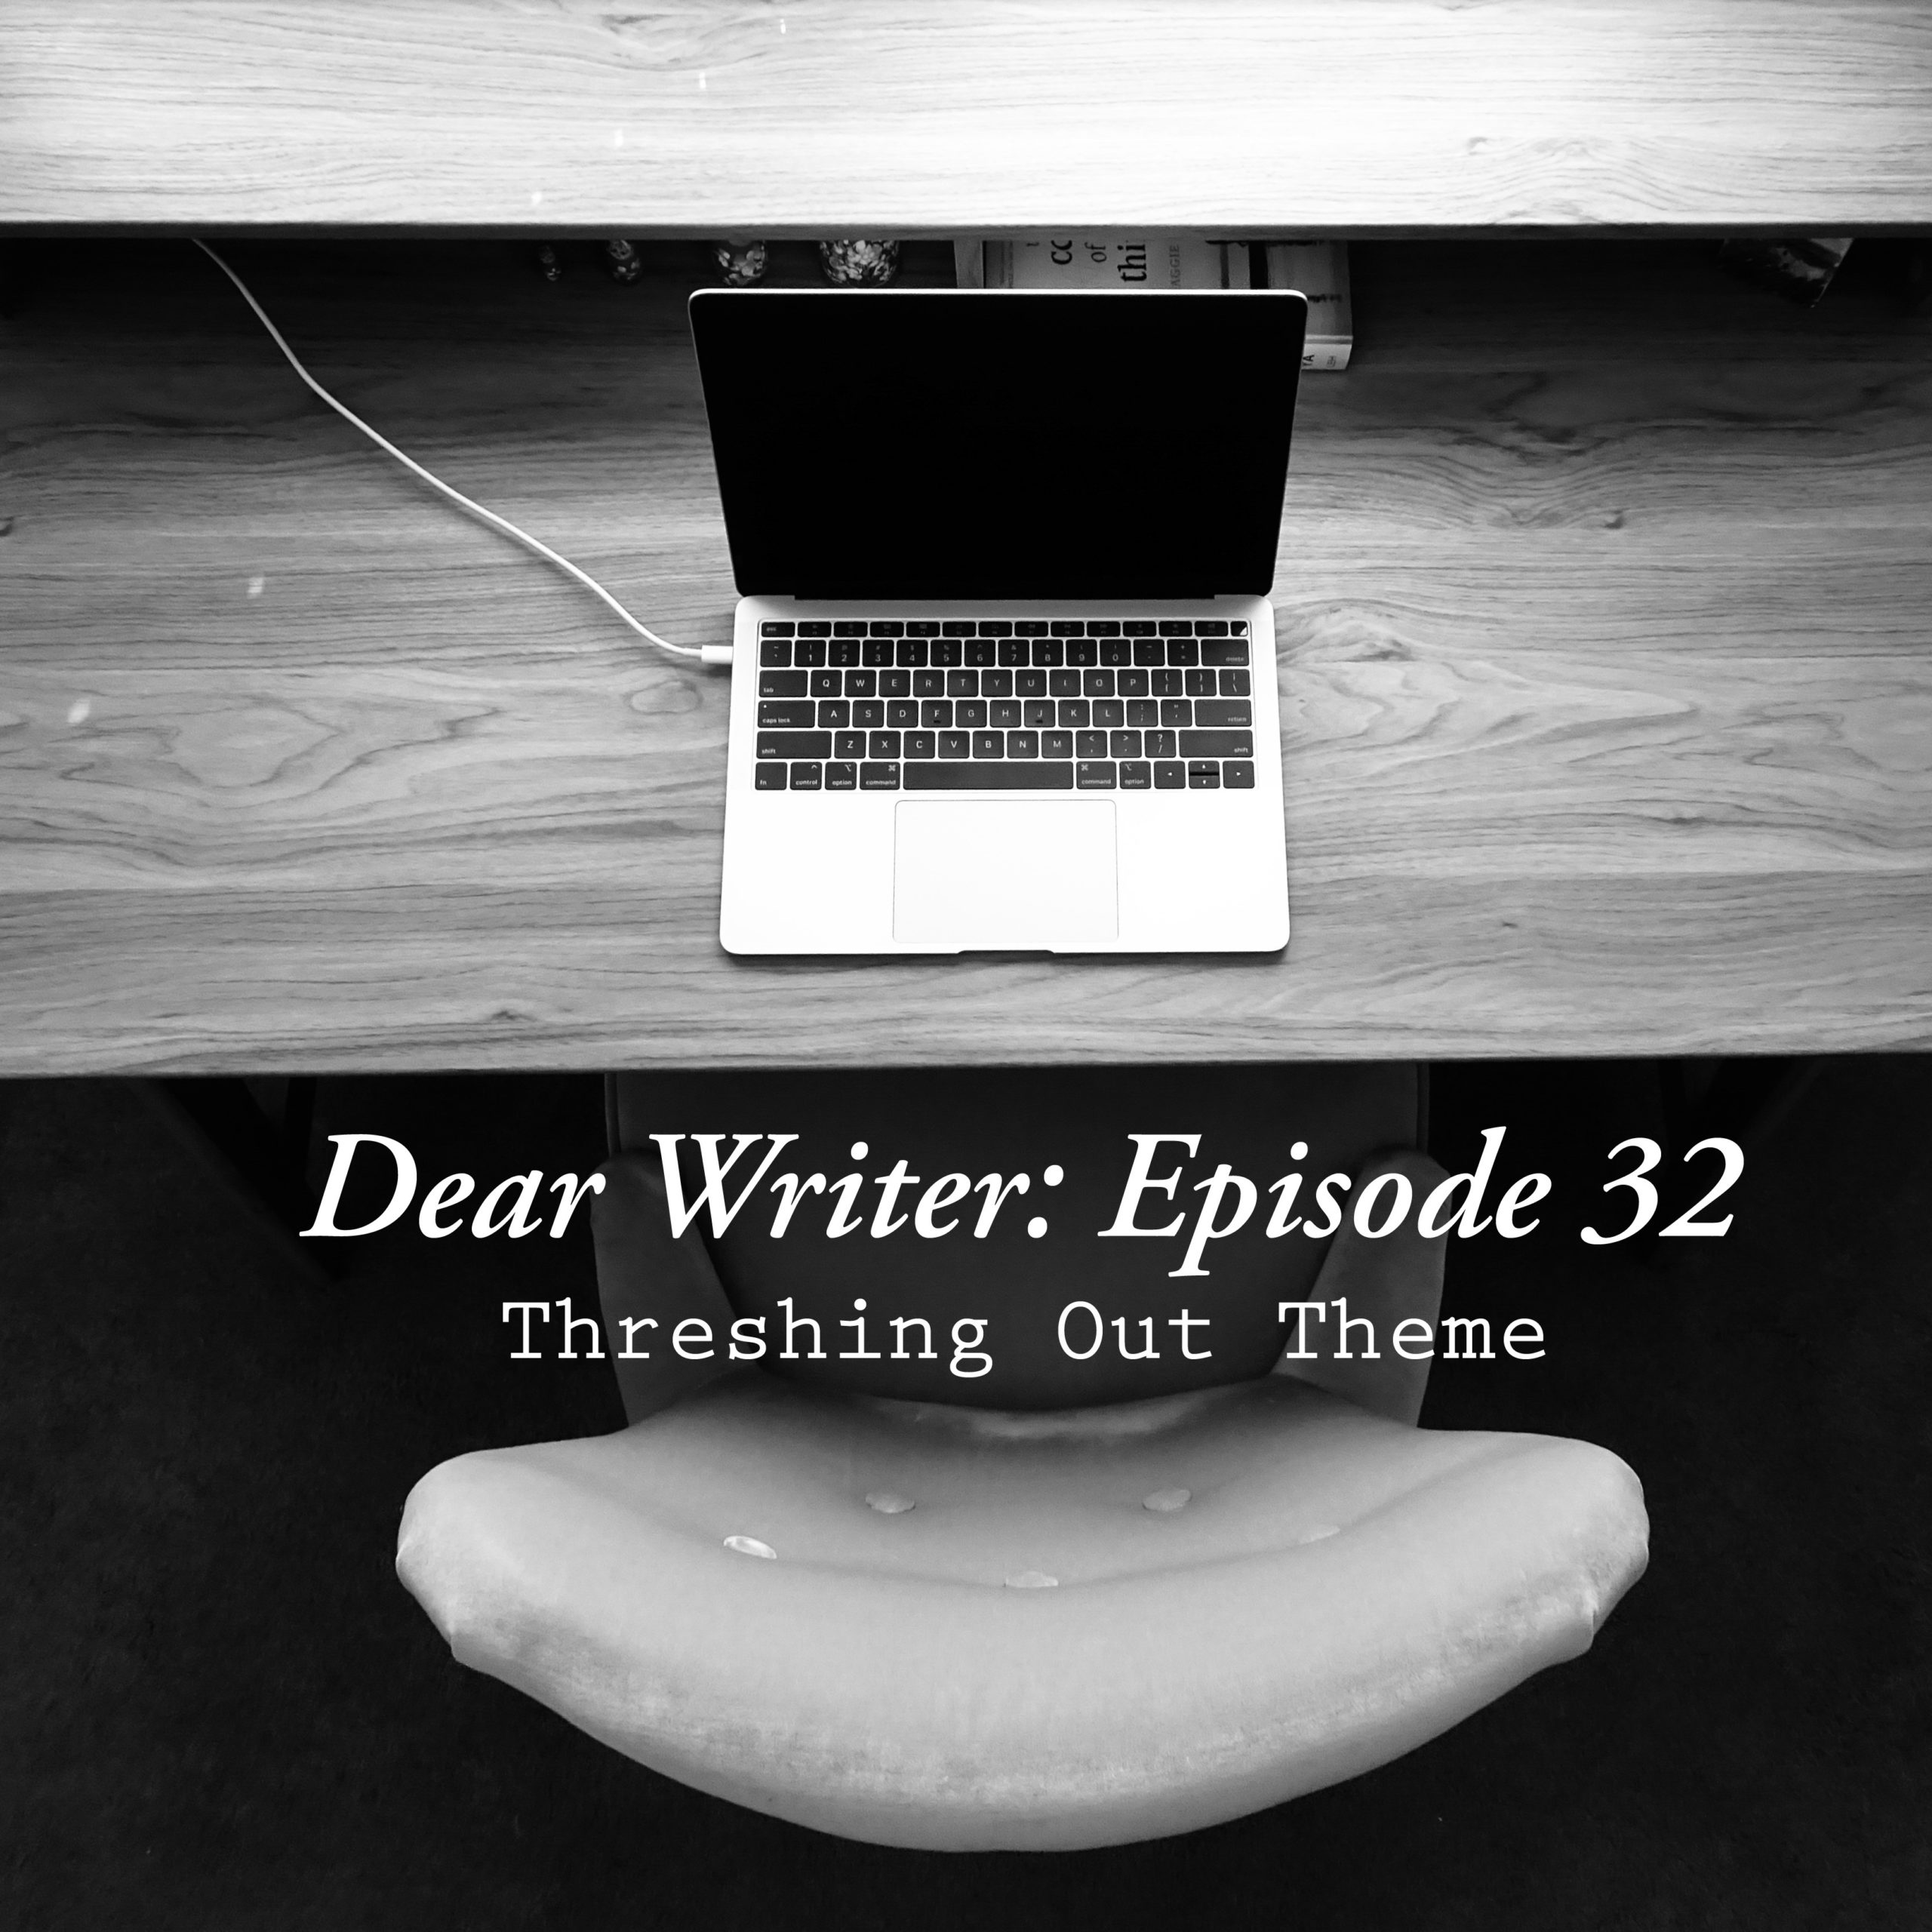 Dear Writer Episode 32: Threshing out Theme